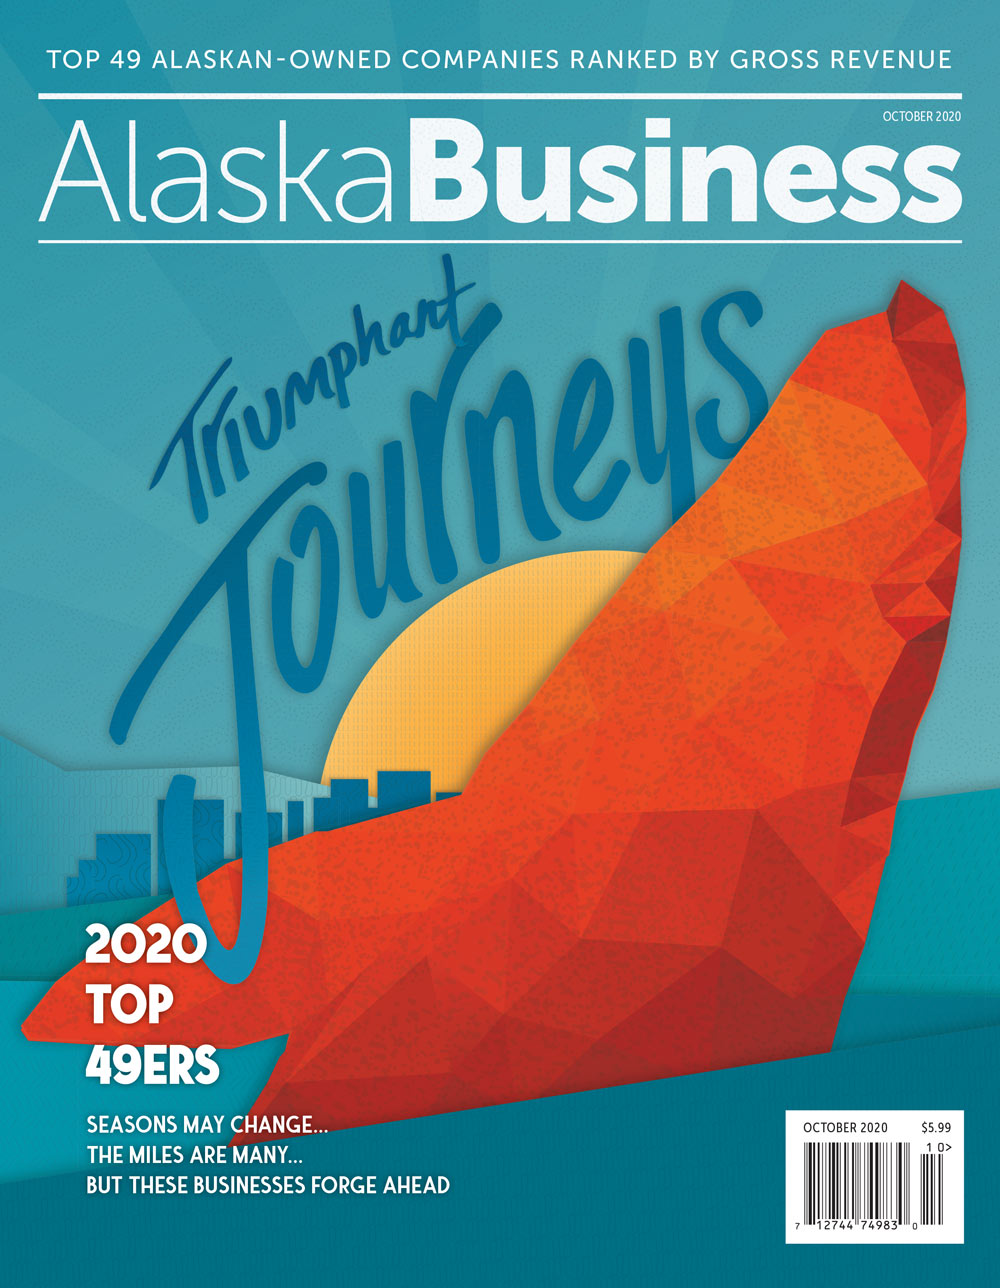 Alaska Business Magazine October 2020 Cover